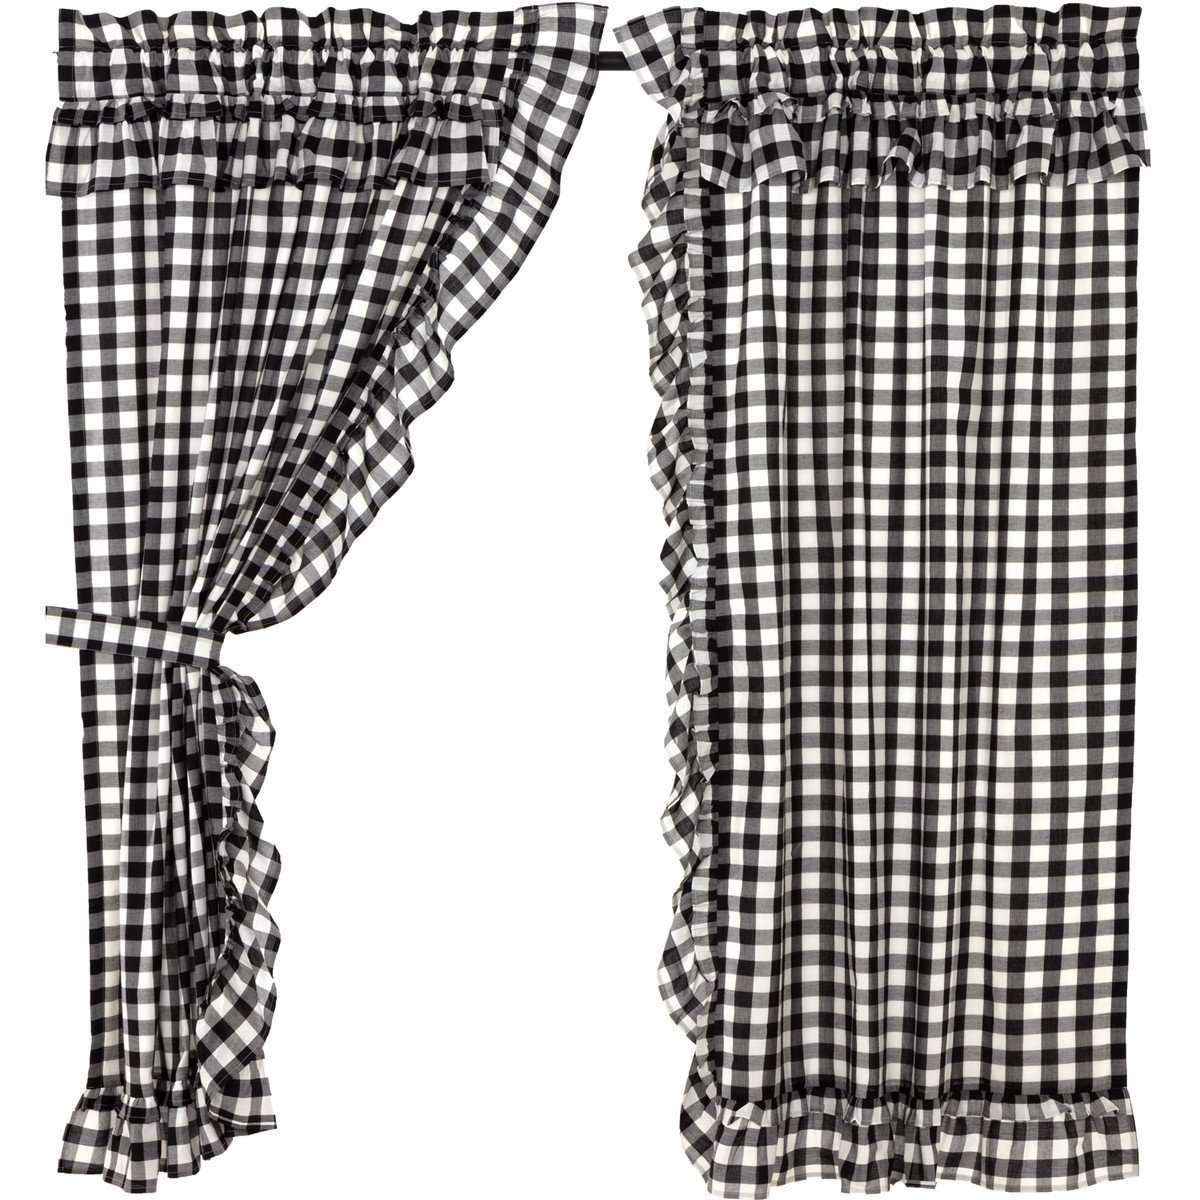 Annie Buffalo Black Check Ruffled Short Panel Curtain Set of 2 63"x36" VHC Brands - The Fox Decor